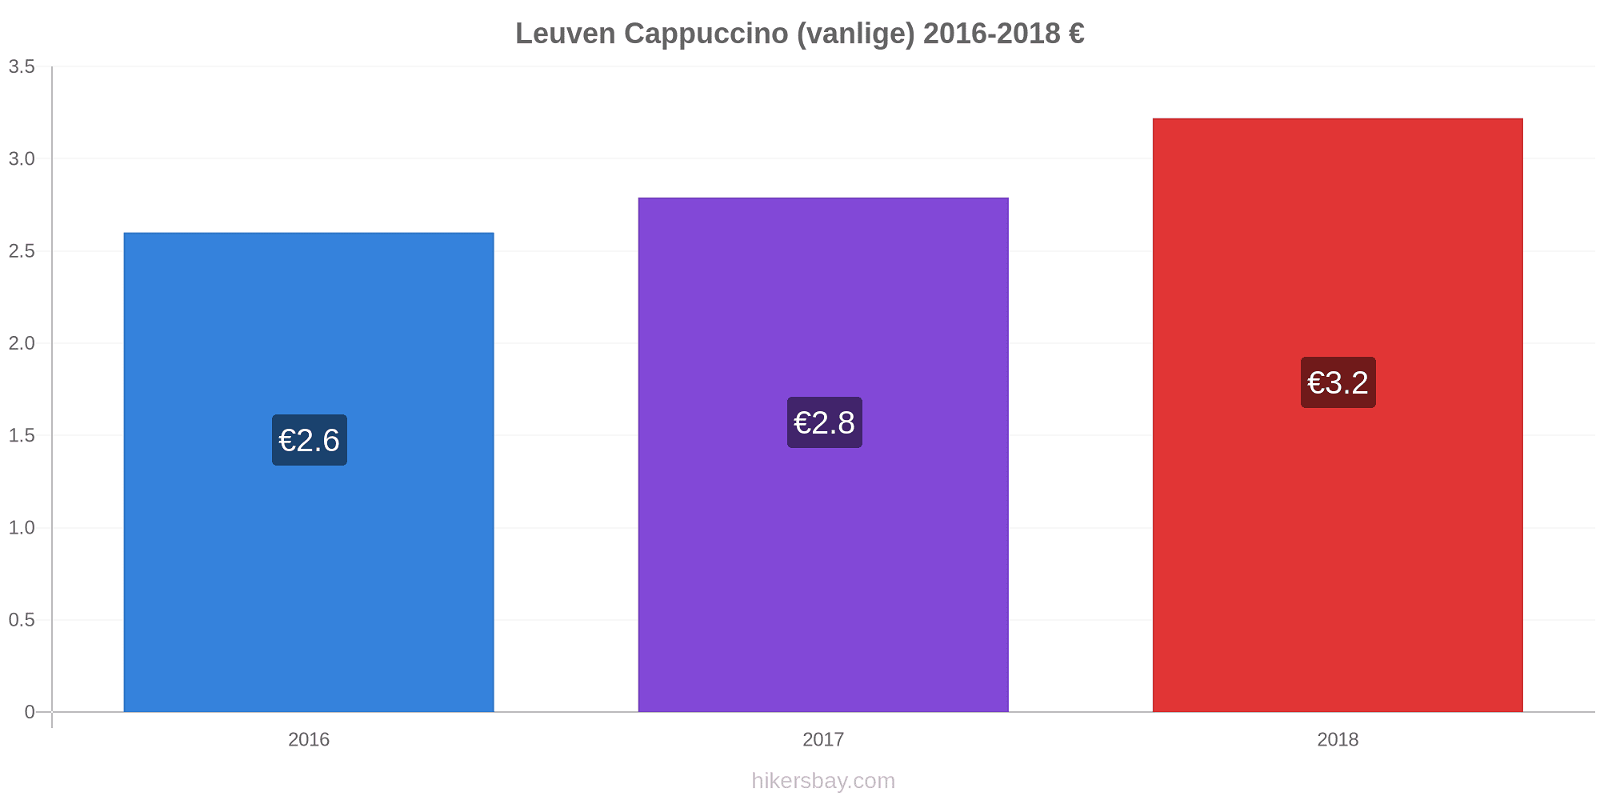 Leuven prisendringer Cappuccino (vanlige) hikersbay.com